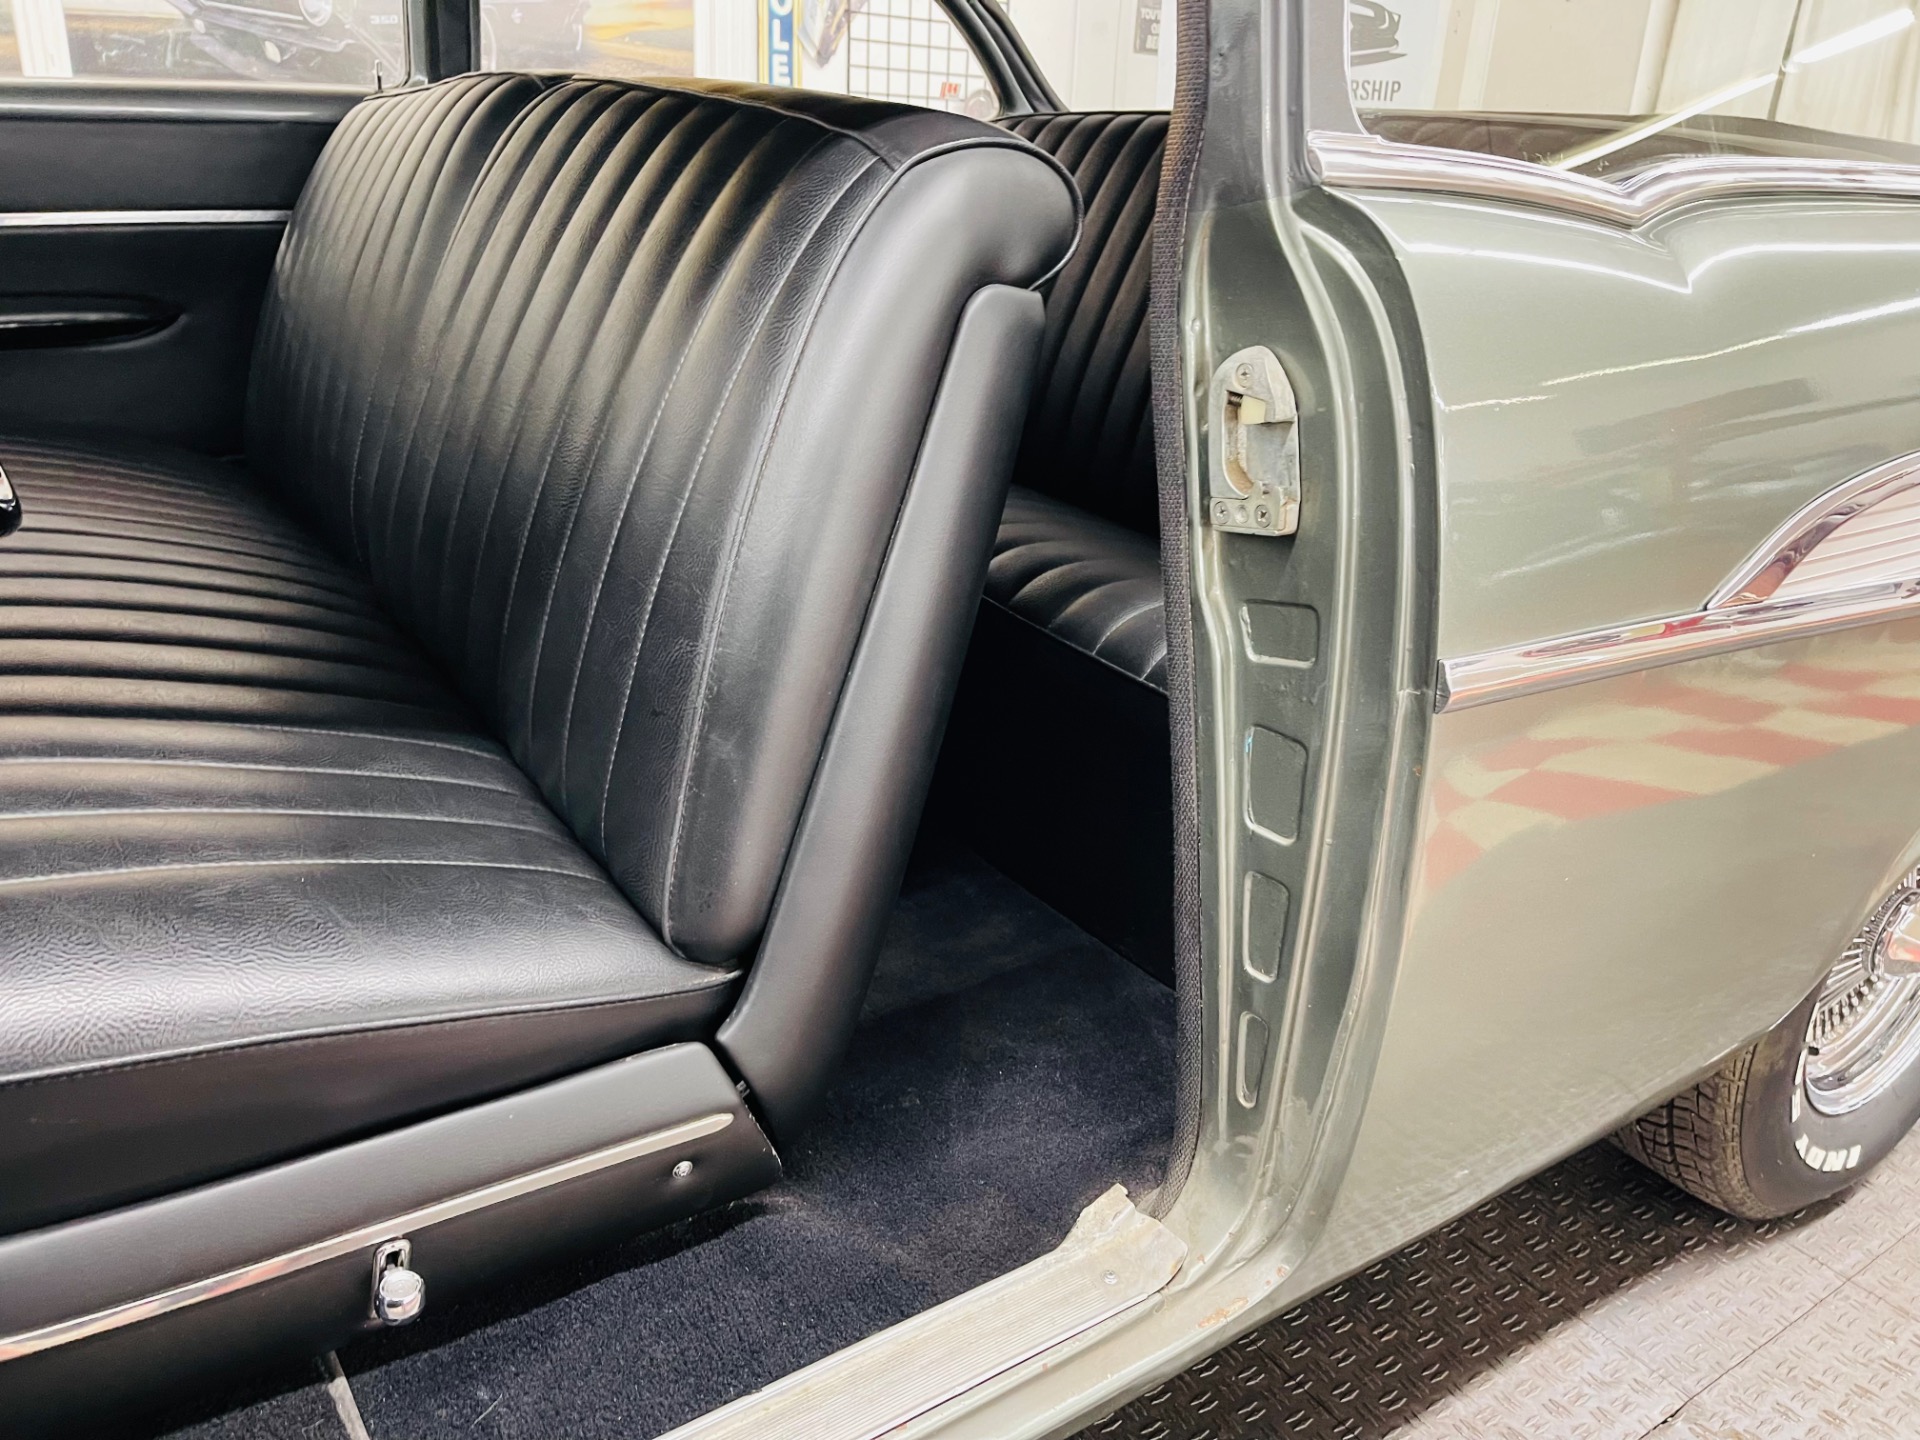 Used 1957 Chevrolet Bel Air - 2 DOOR SEDAN - OLDER RESTORATION - RUNS GREAT - | Mundelein, IL